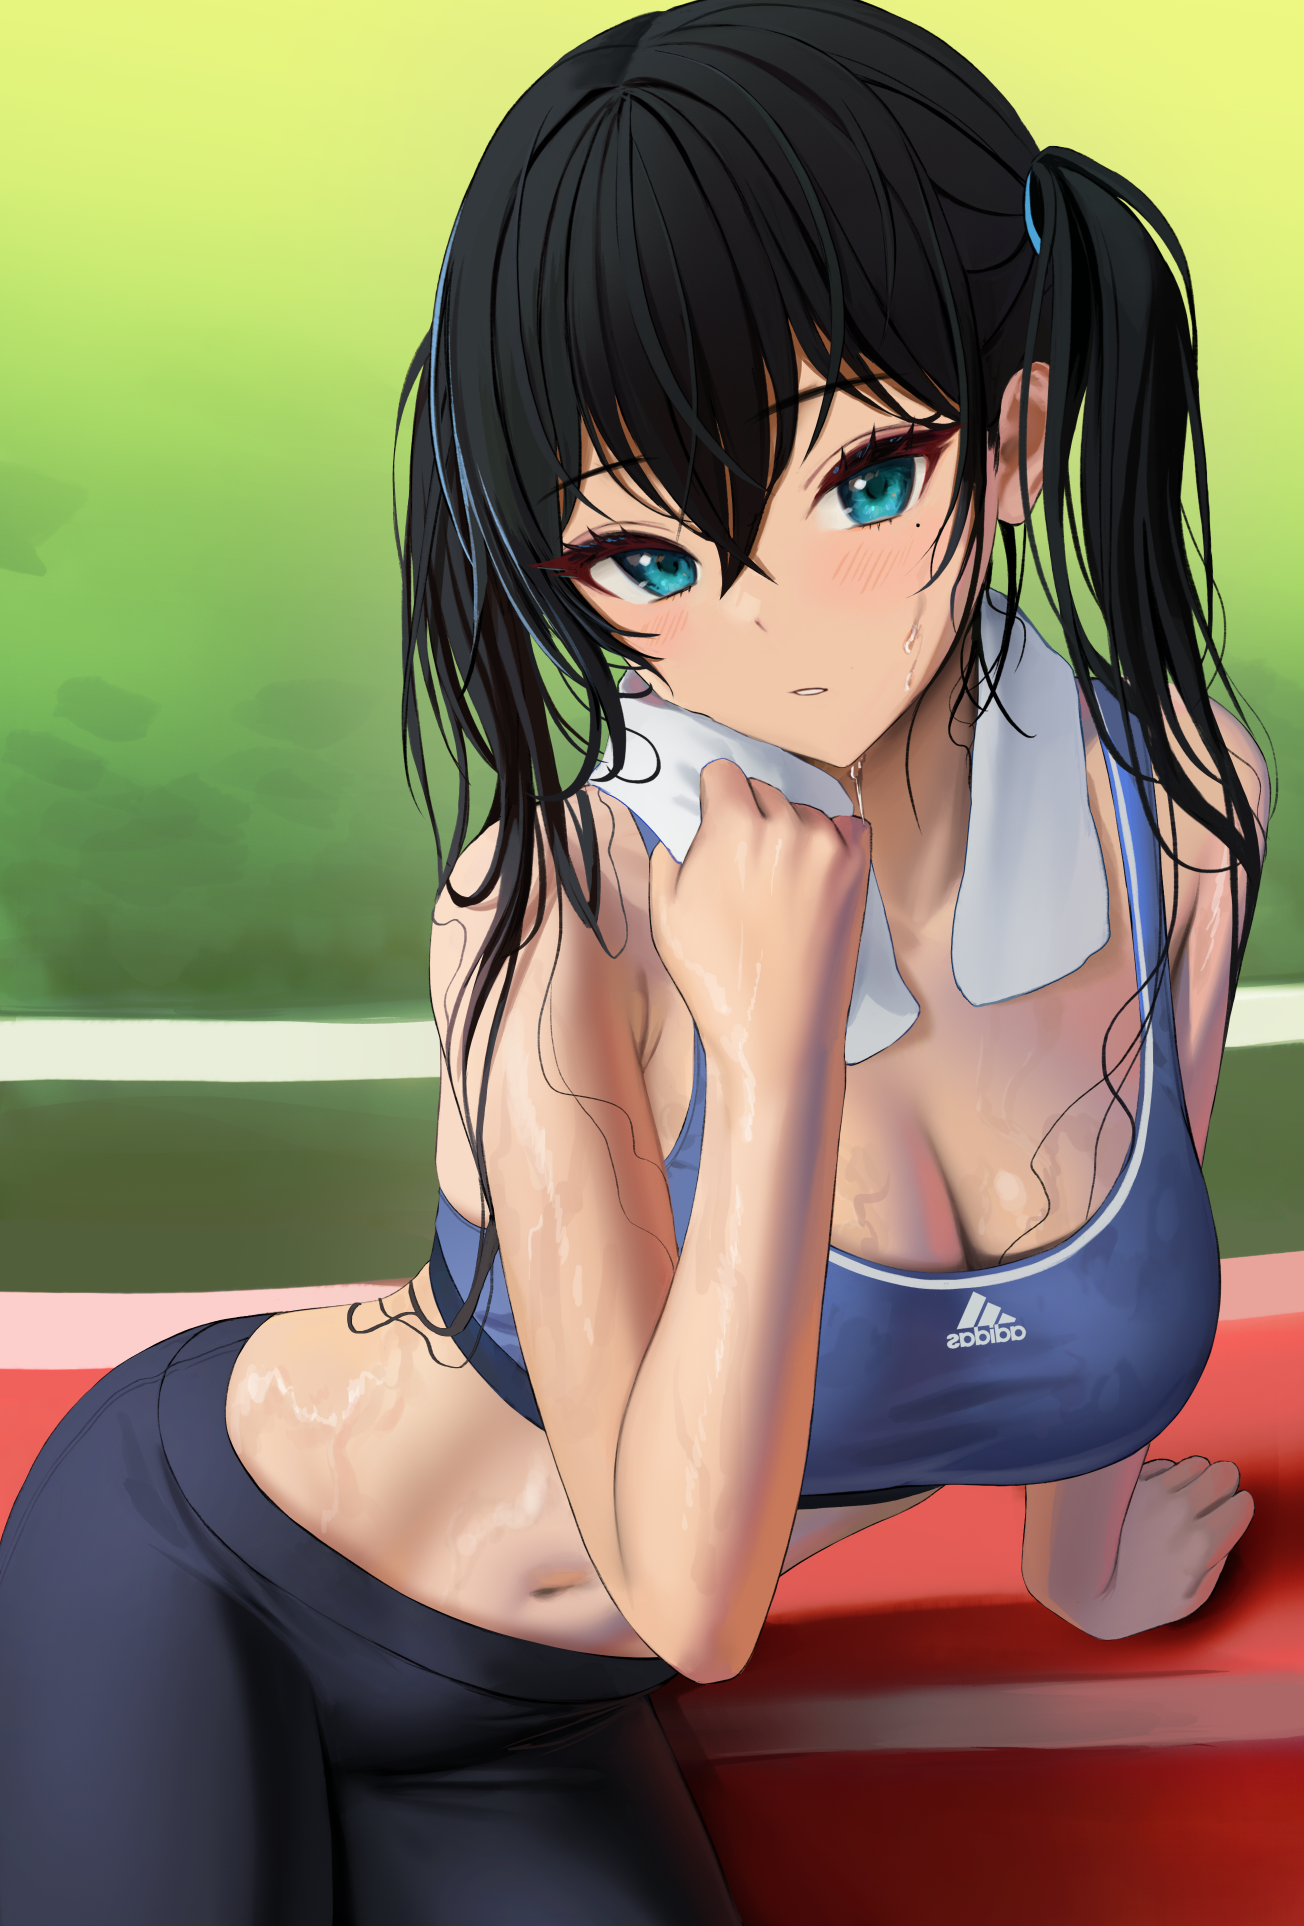 Anime 1304x1926 anime anime girls Tokkihouse artwork black hair twintails blue eyes sweat sportswear cleavage